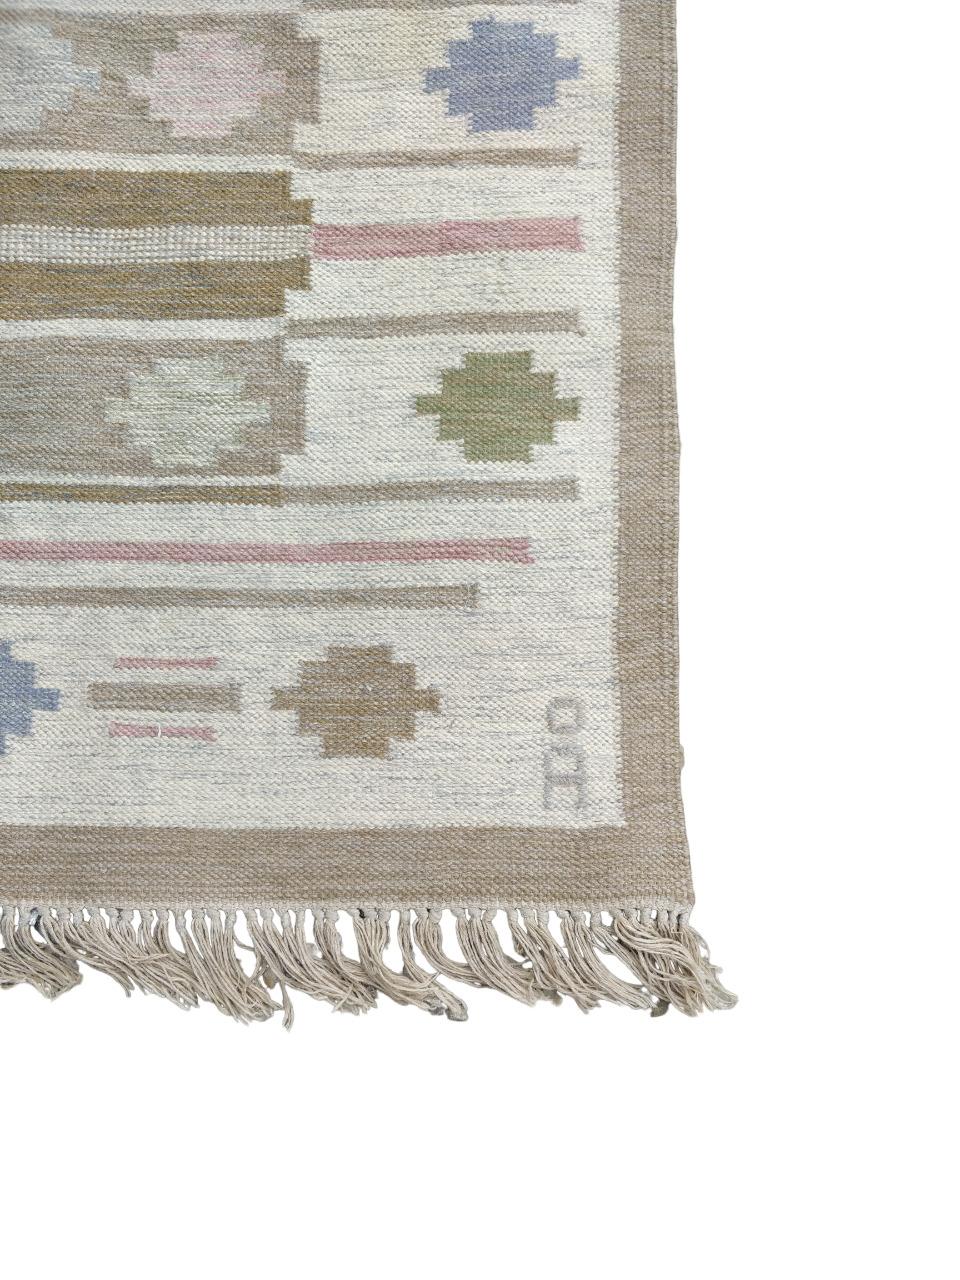  Flat-weave Kilim carpet by Swedish textile designer Anna Johanna Ångström   In Good Condition For Sale In Firenze, FI